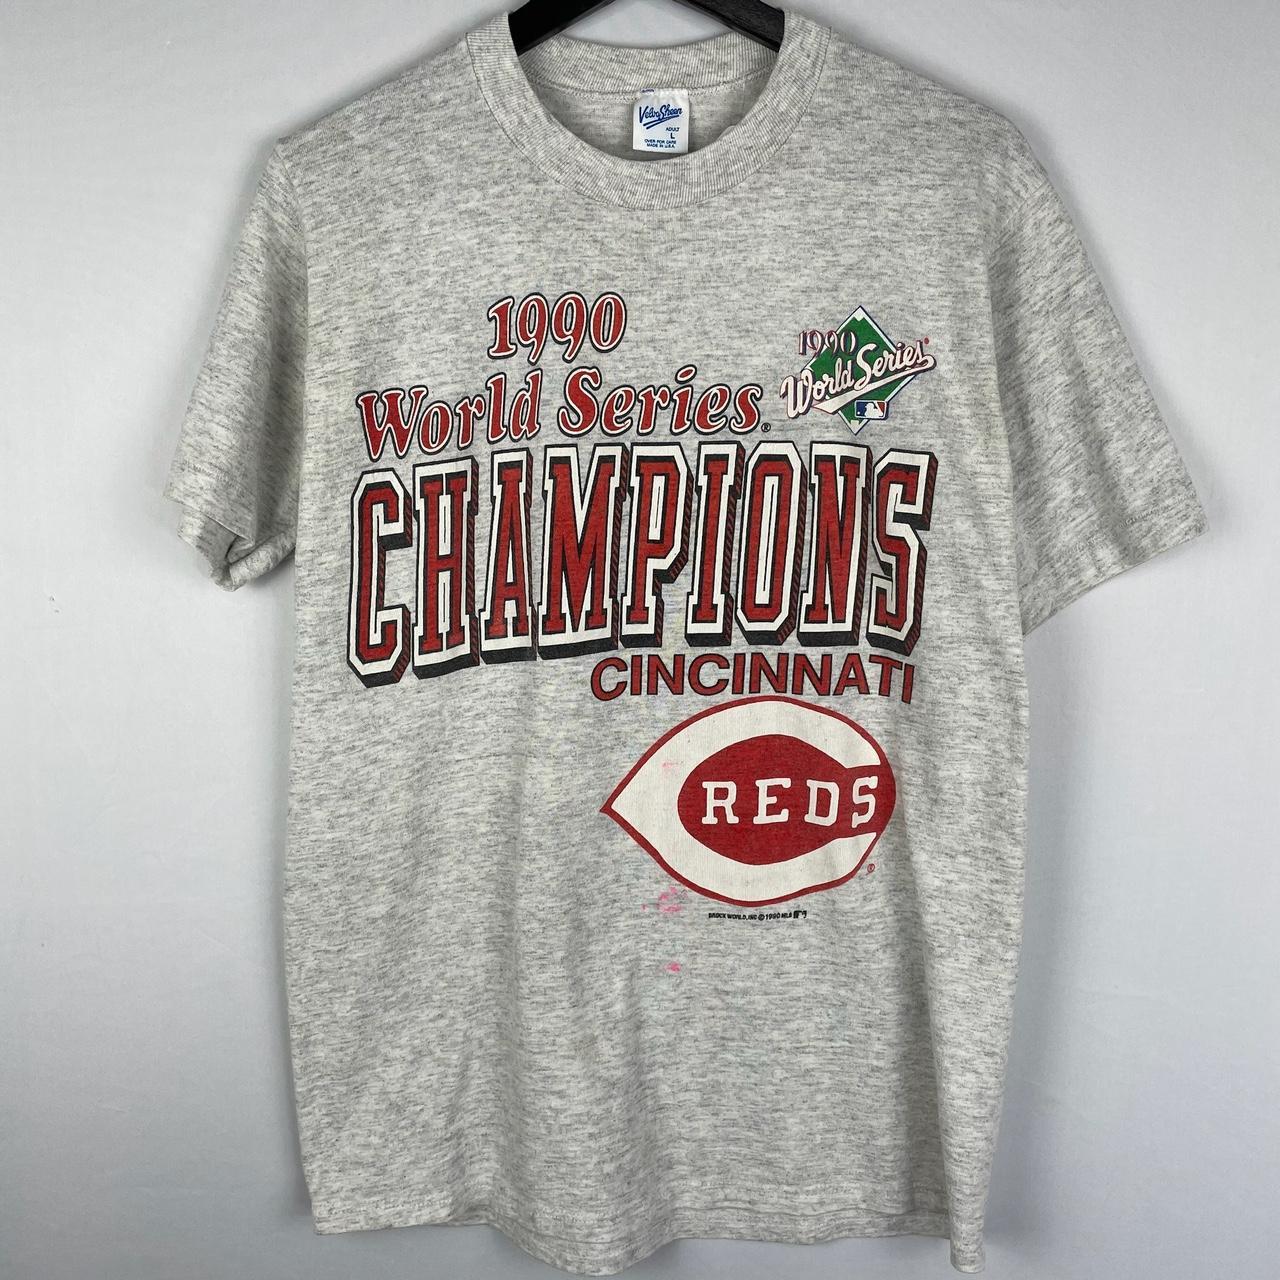 Vintage 1990 Cincinnati Reds World Series champions - Depop